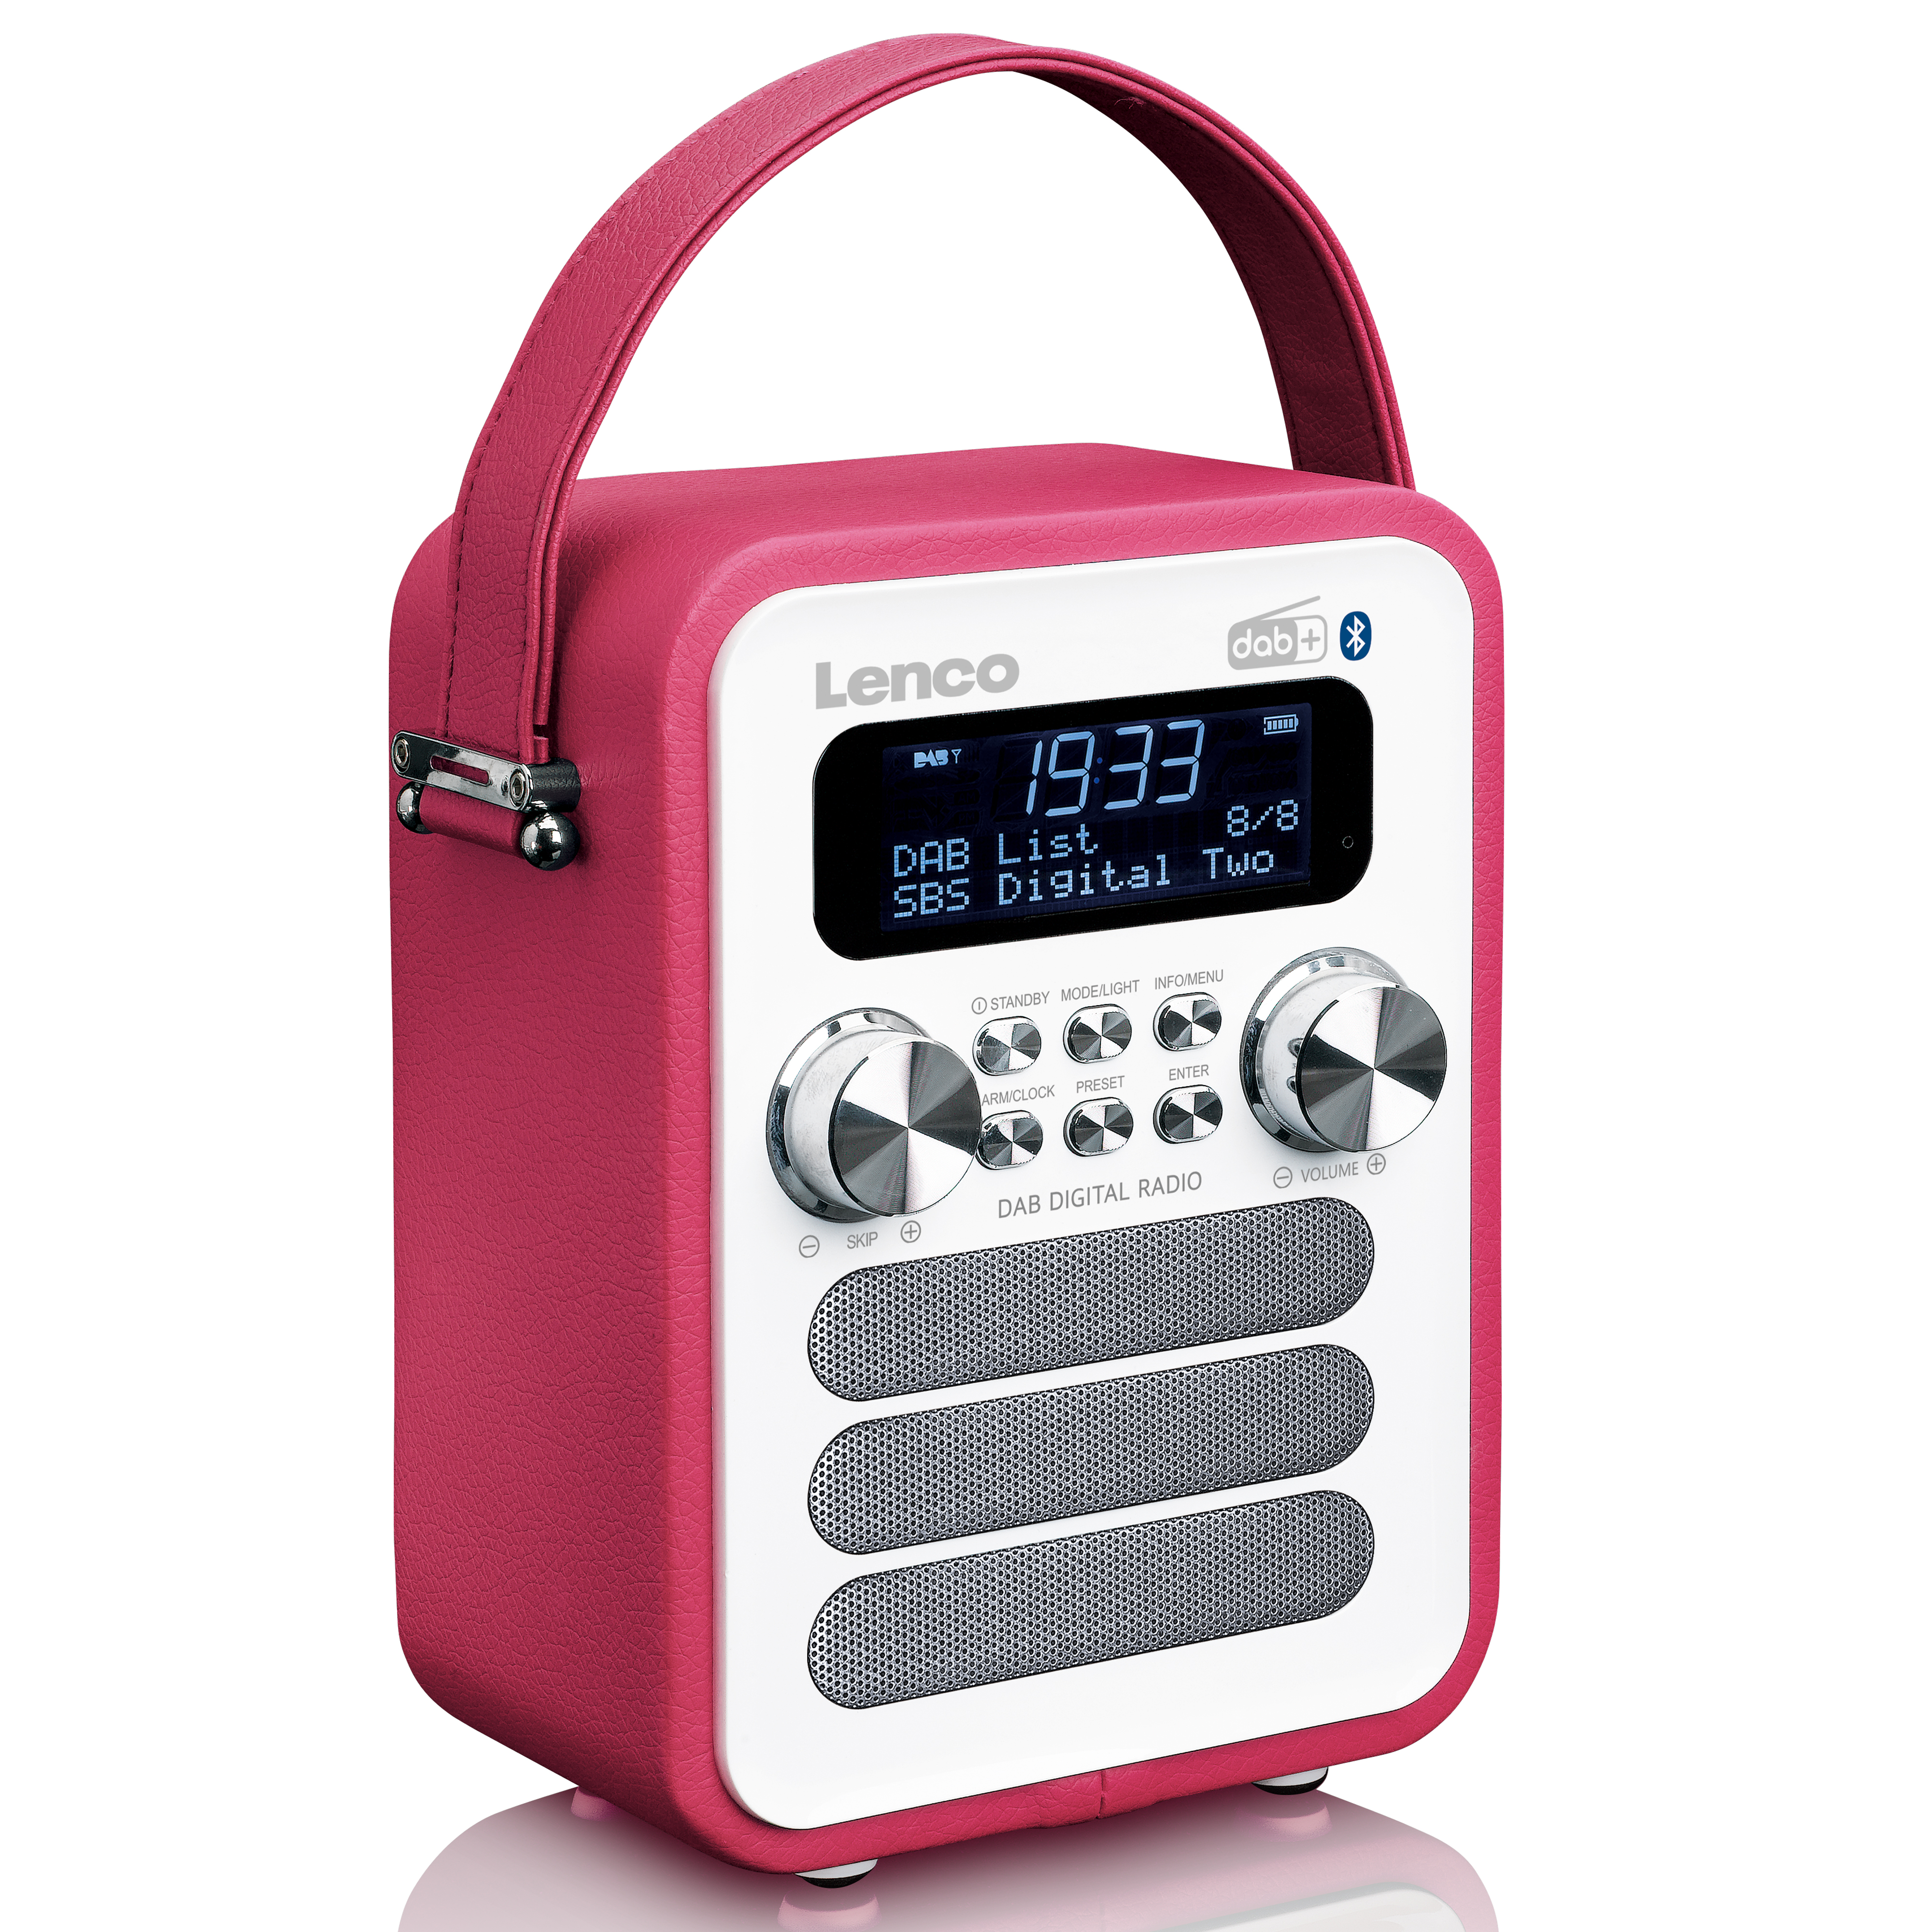 Lenco PDR-051 DAB Radio, Pink/White | Buy online now SoundStoreXL